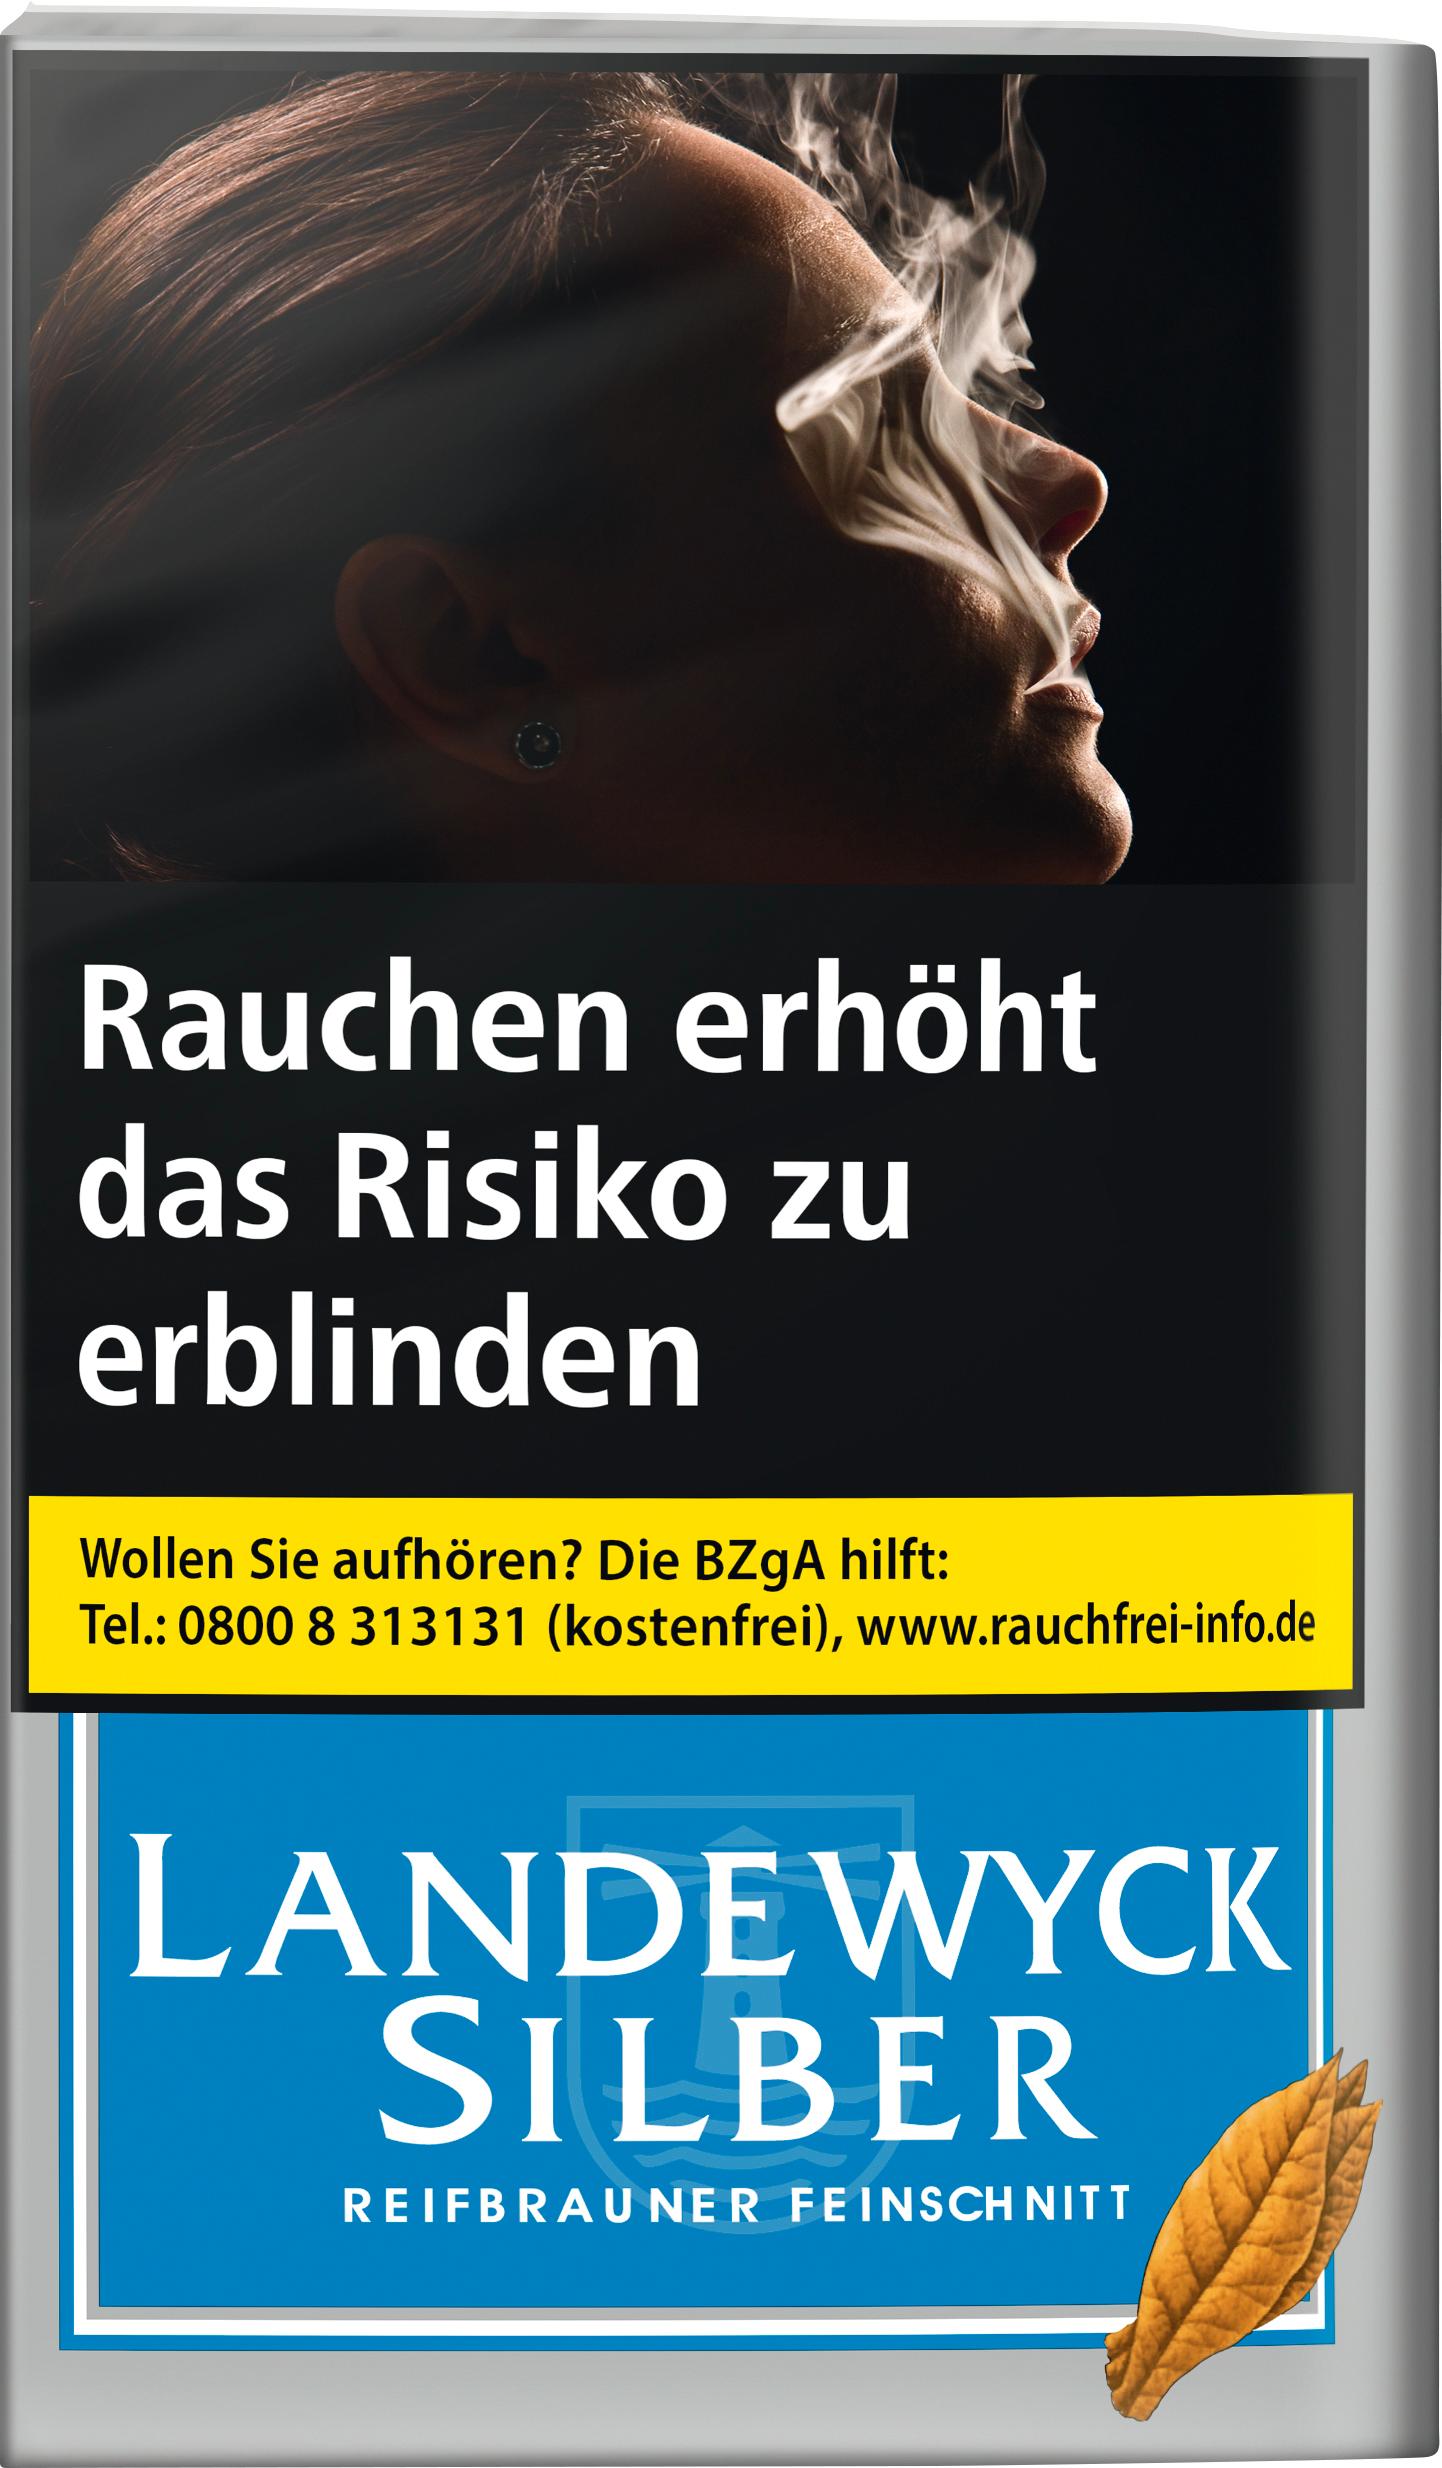 Landewyck Silber Zigarettentabak 1 Stange